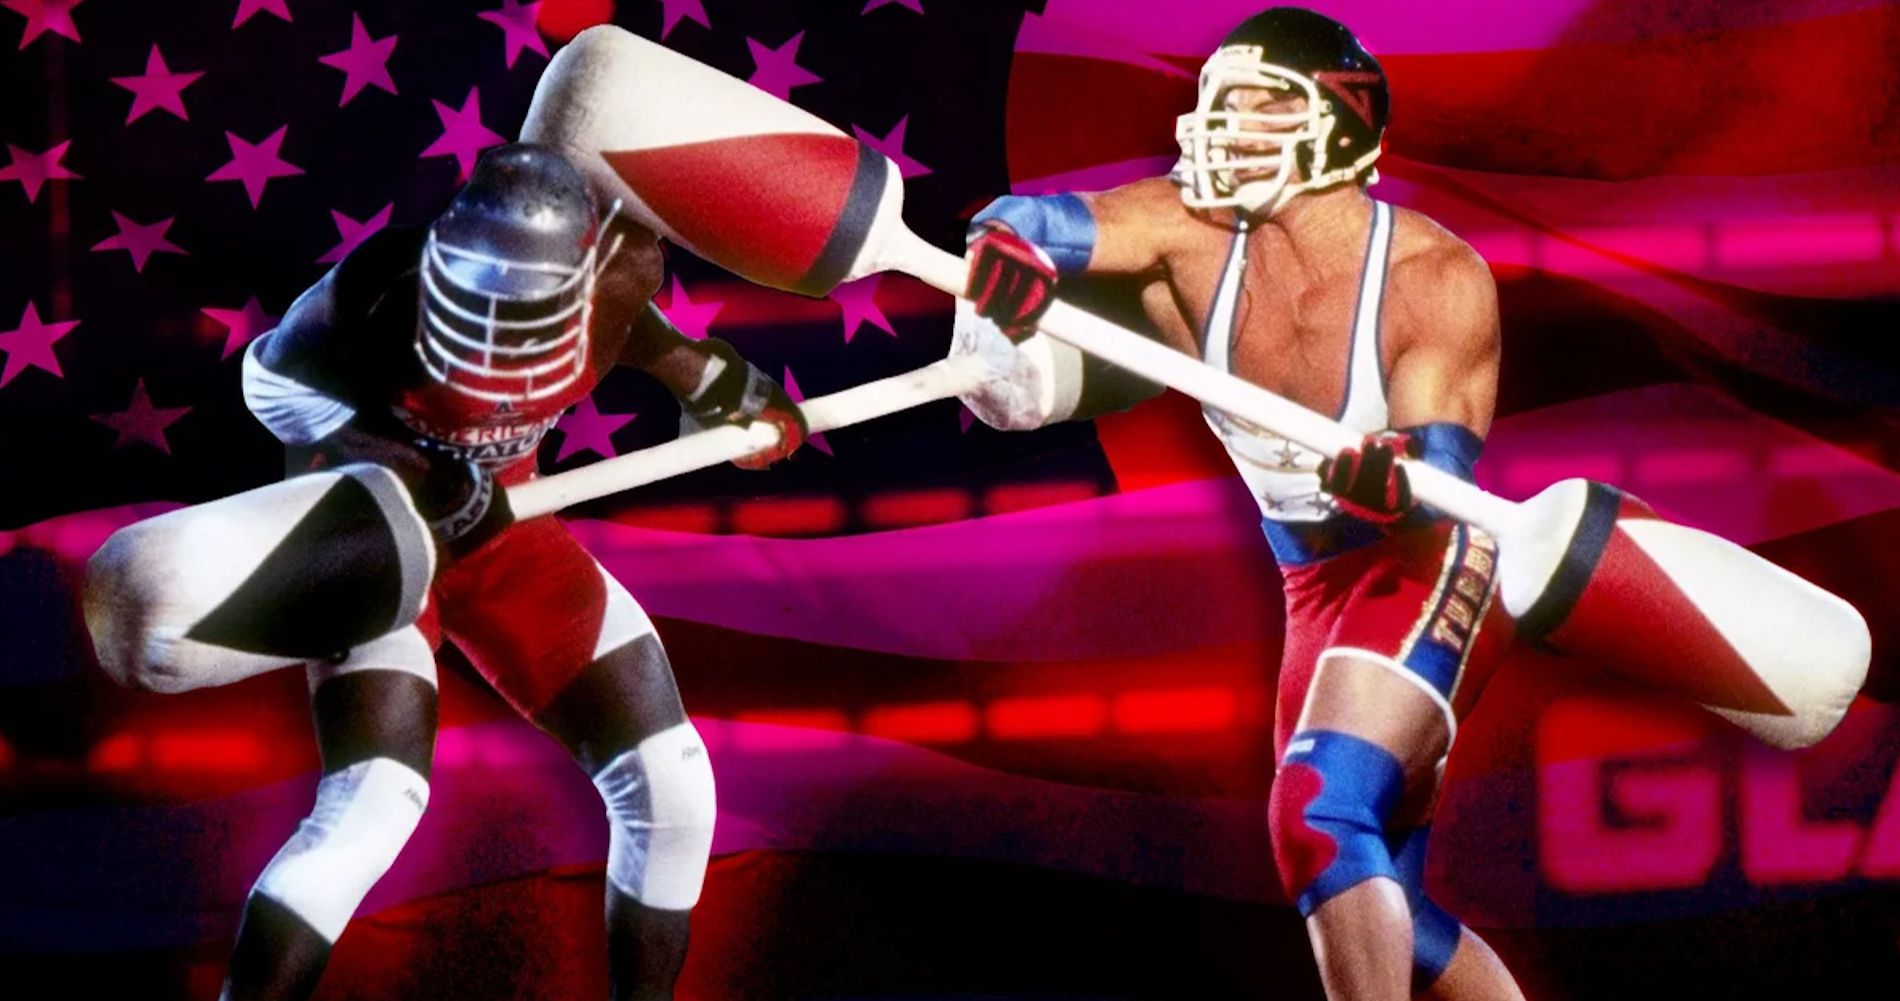 american gladiators costume